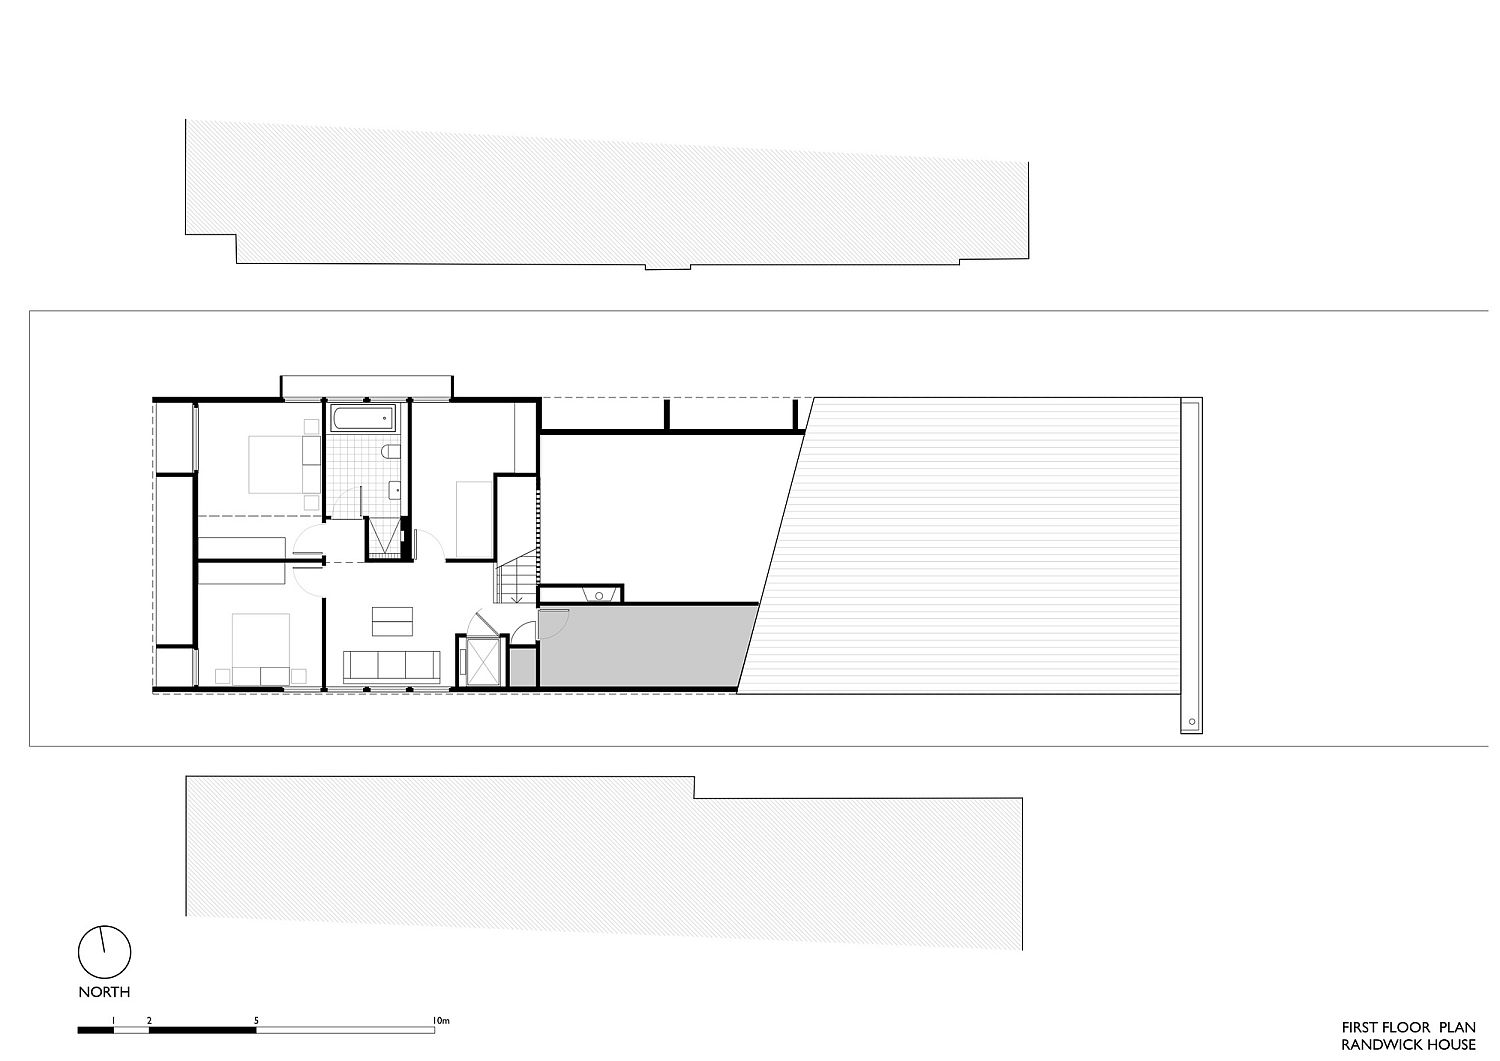 First floor plan of Randwick House